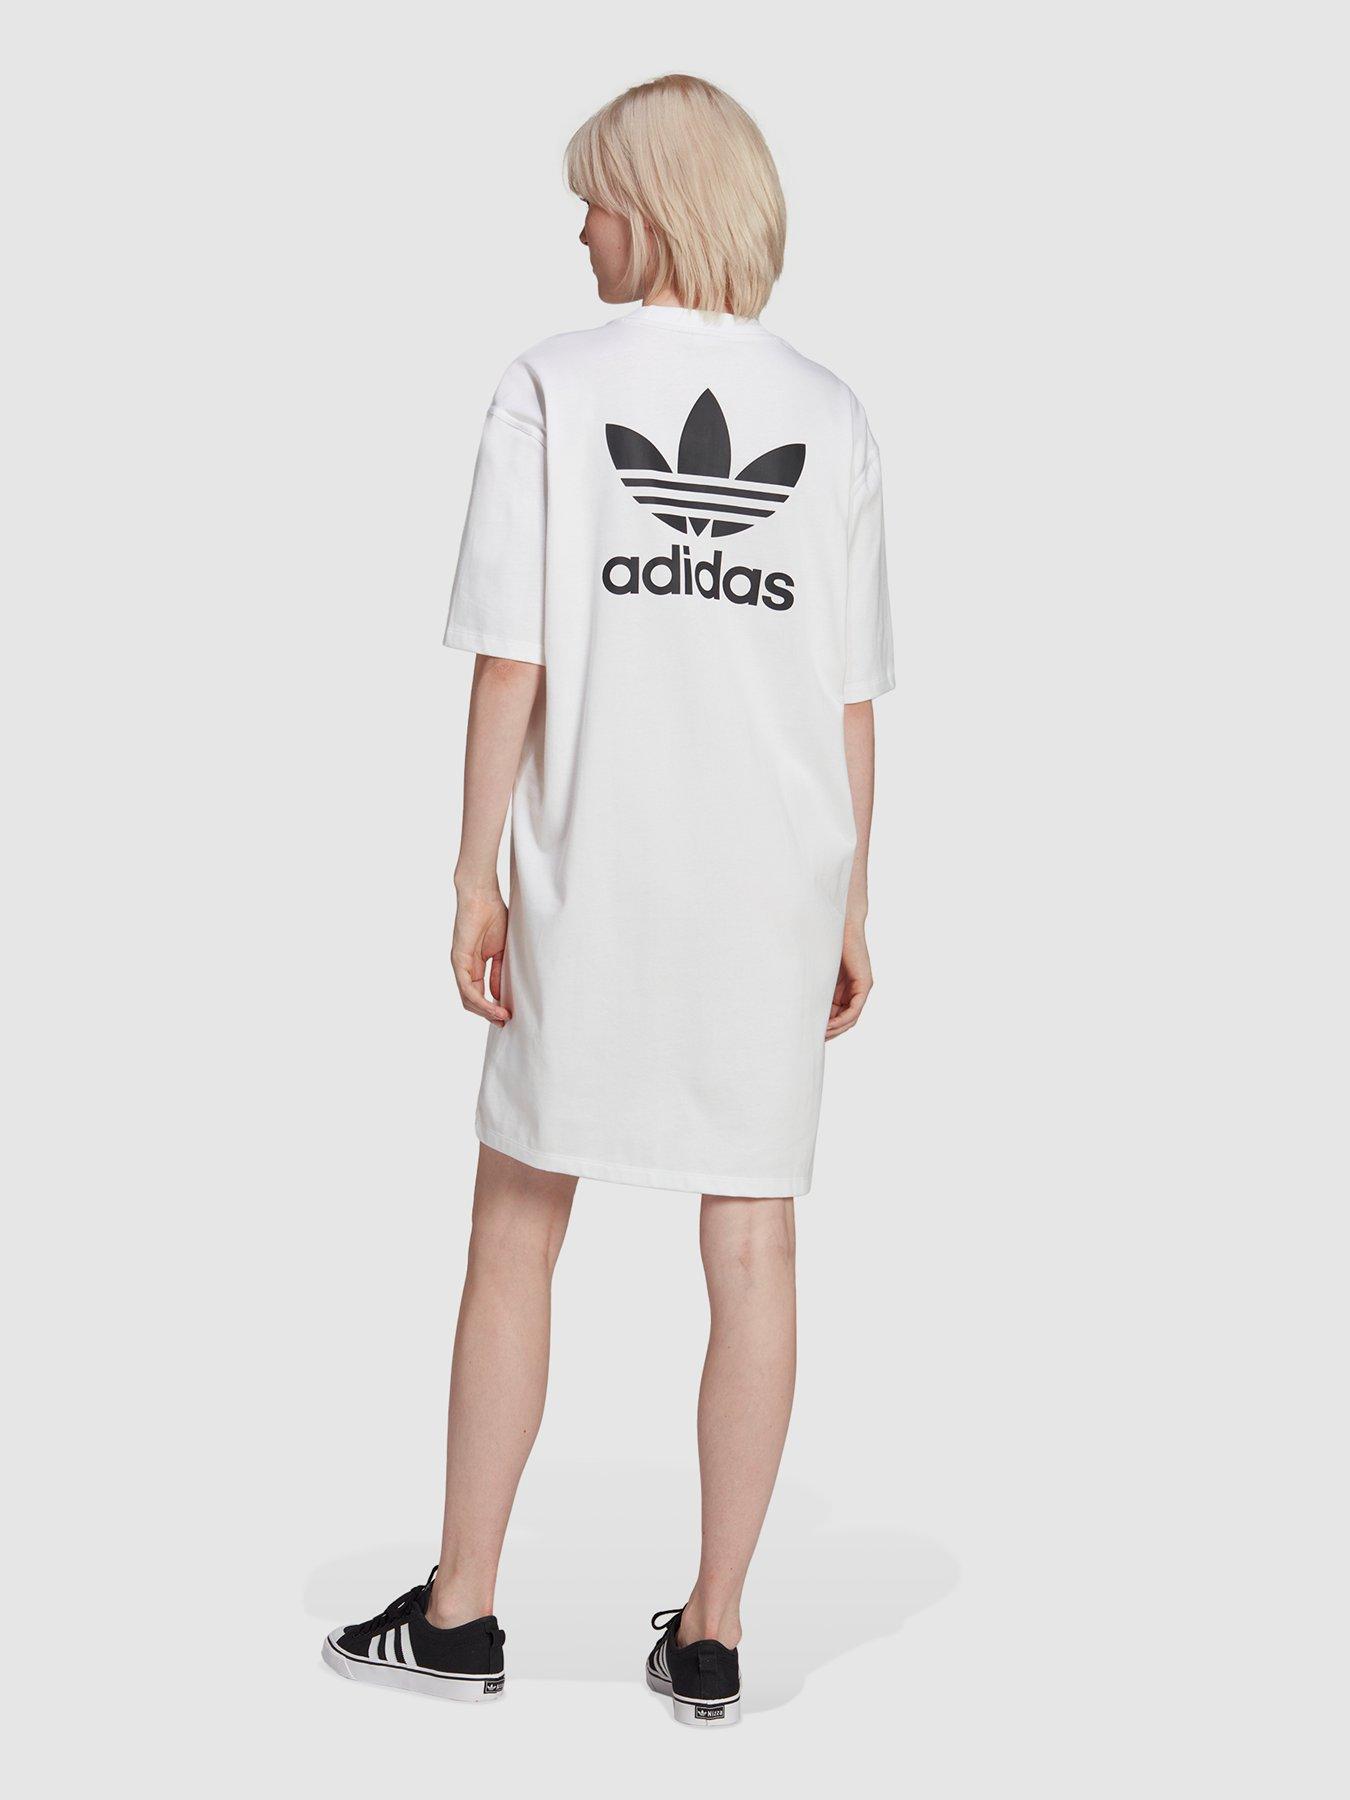 adidas Originals Tee Dress - White | very.co.uk